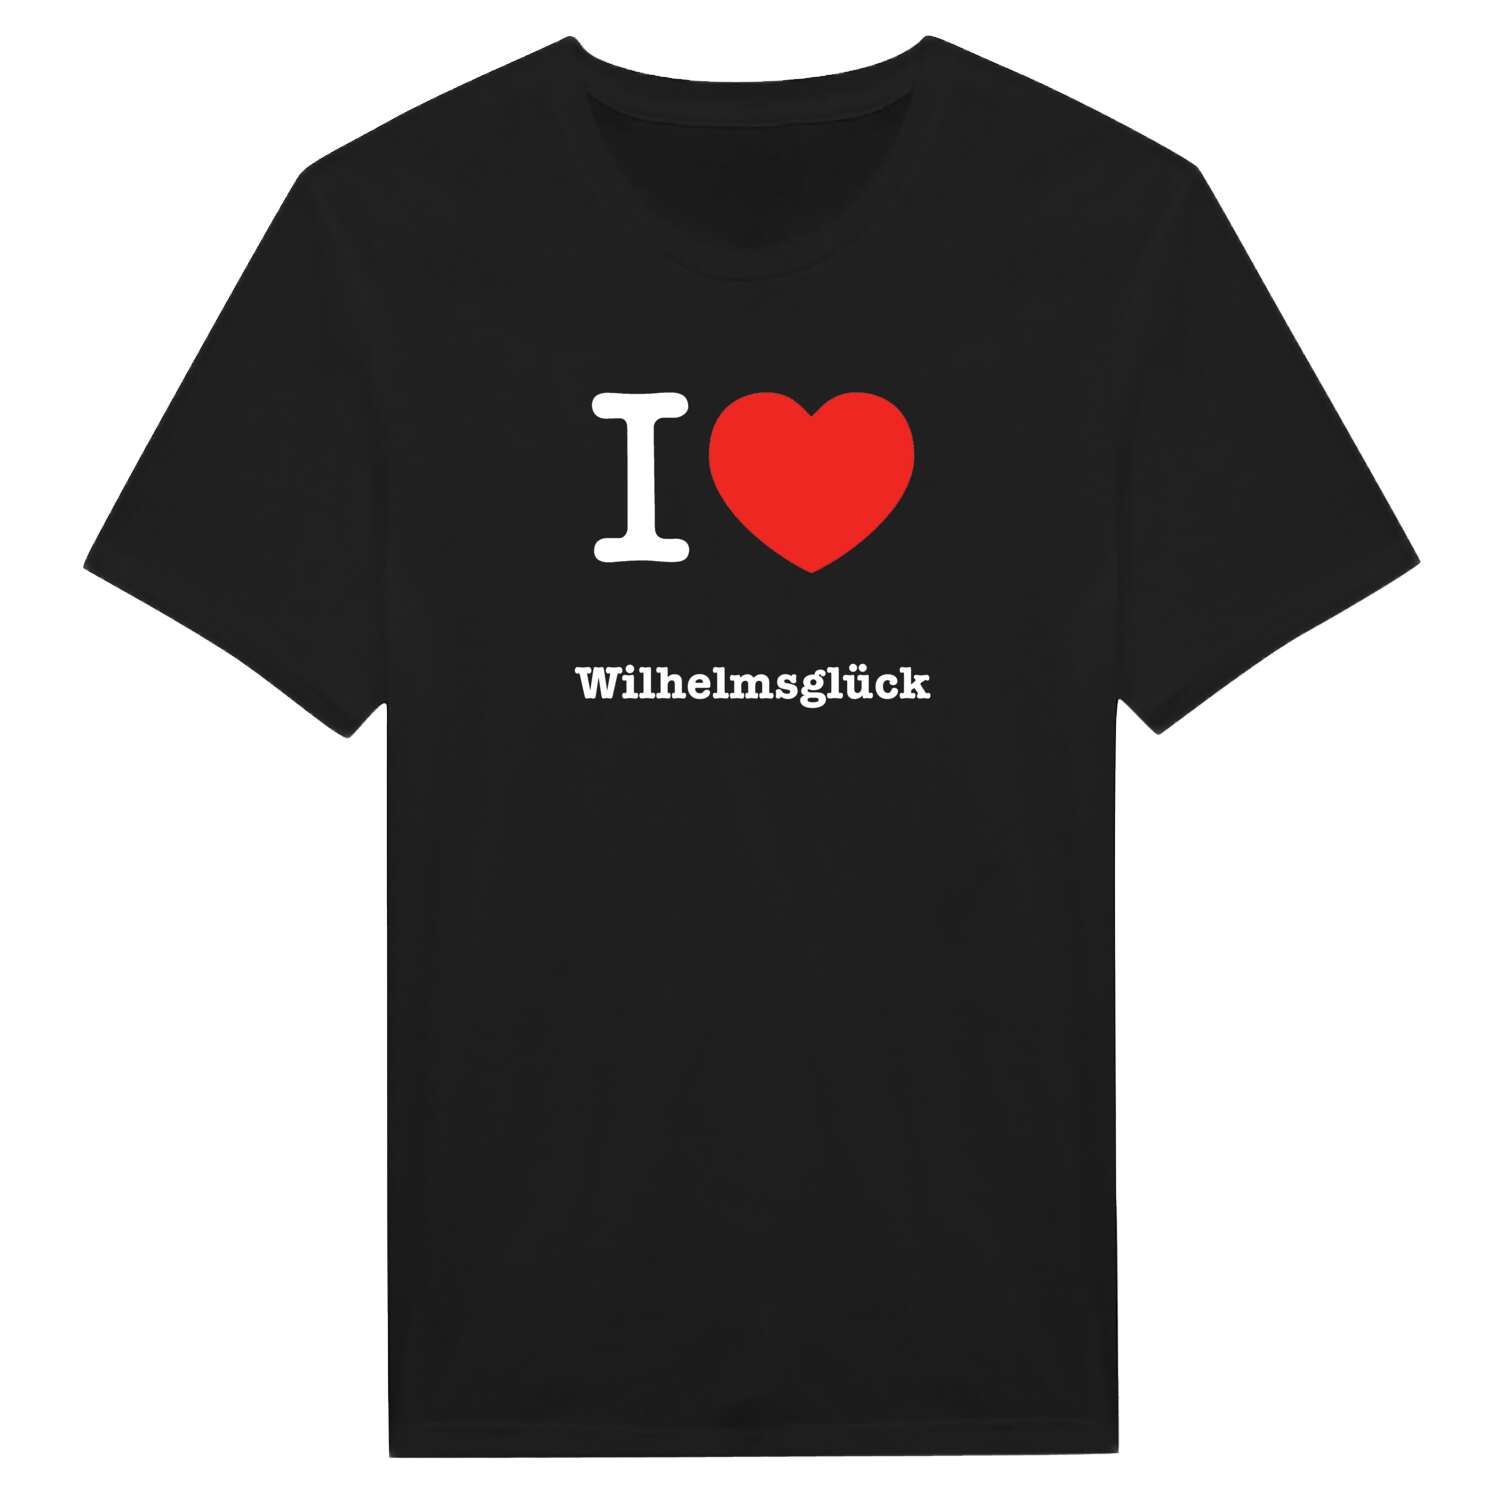 Wilhelmsglück T-Shirt »I love«